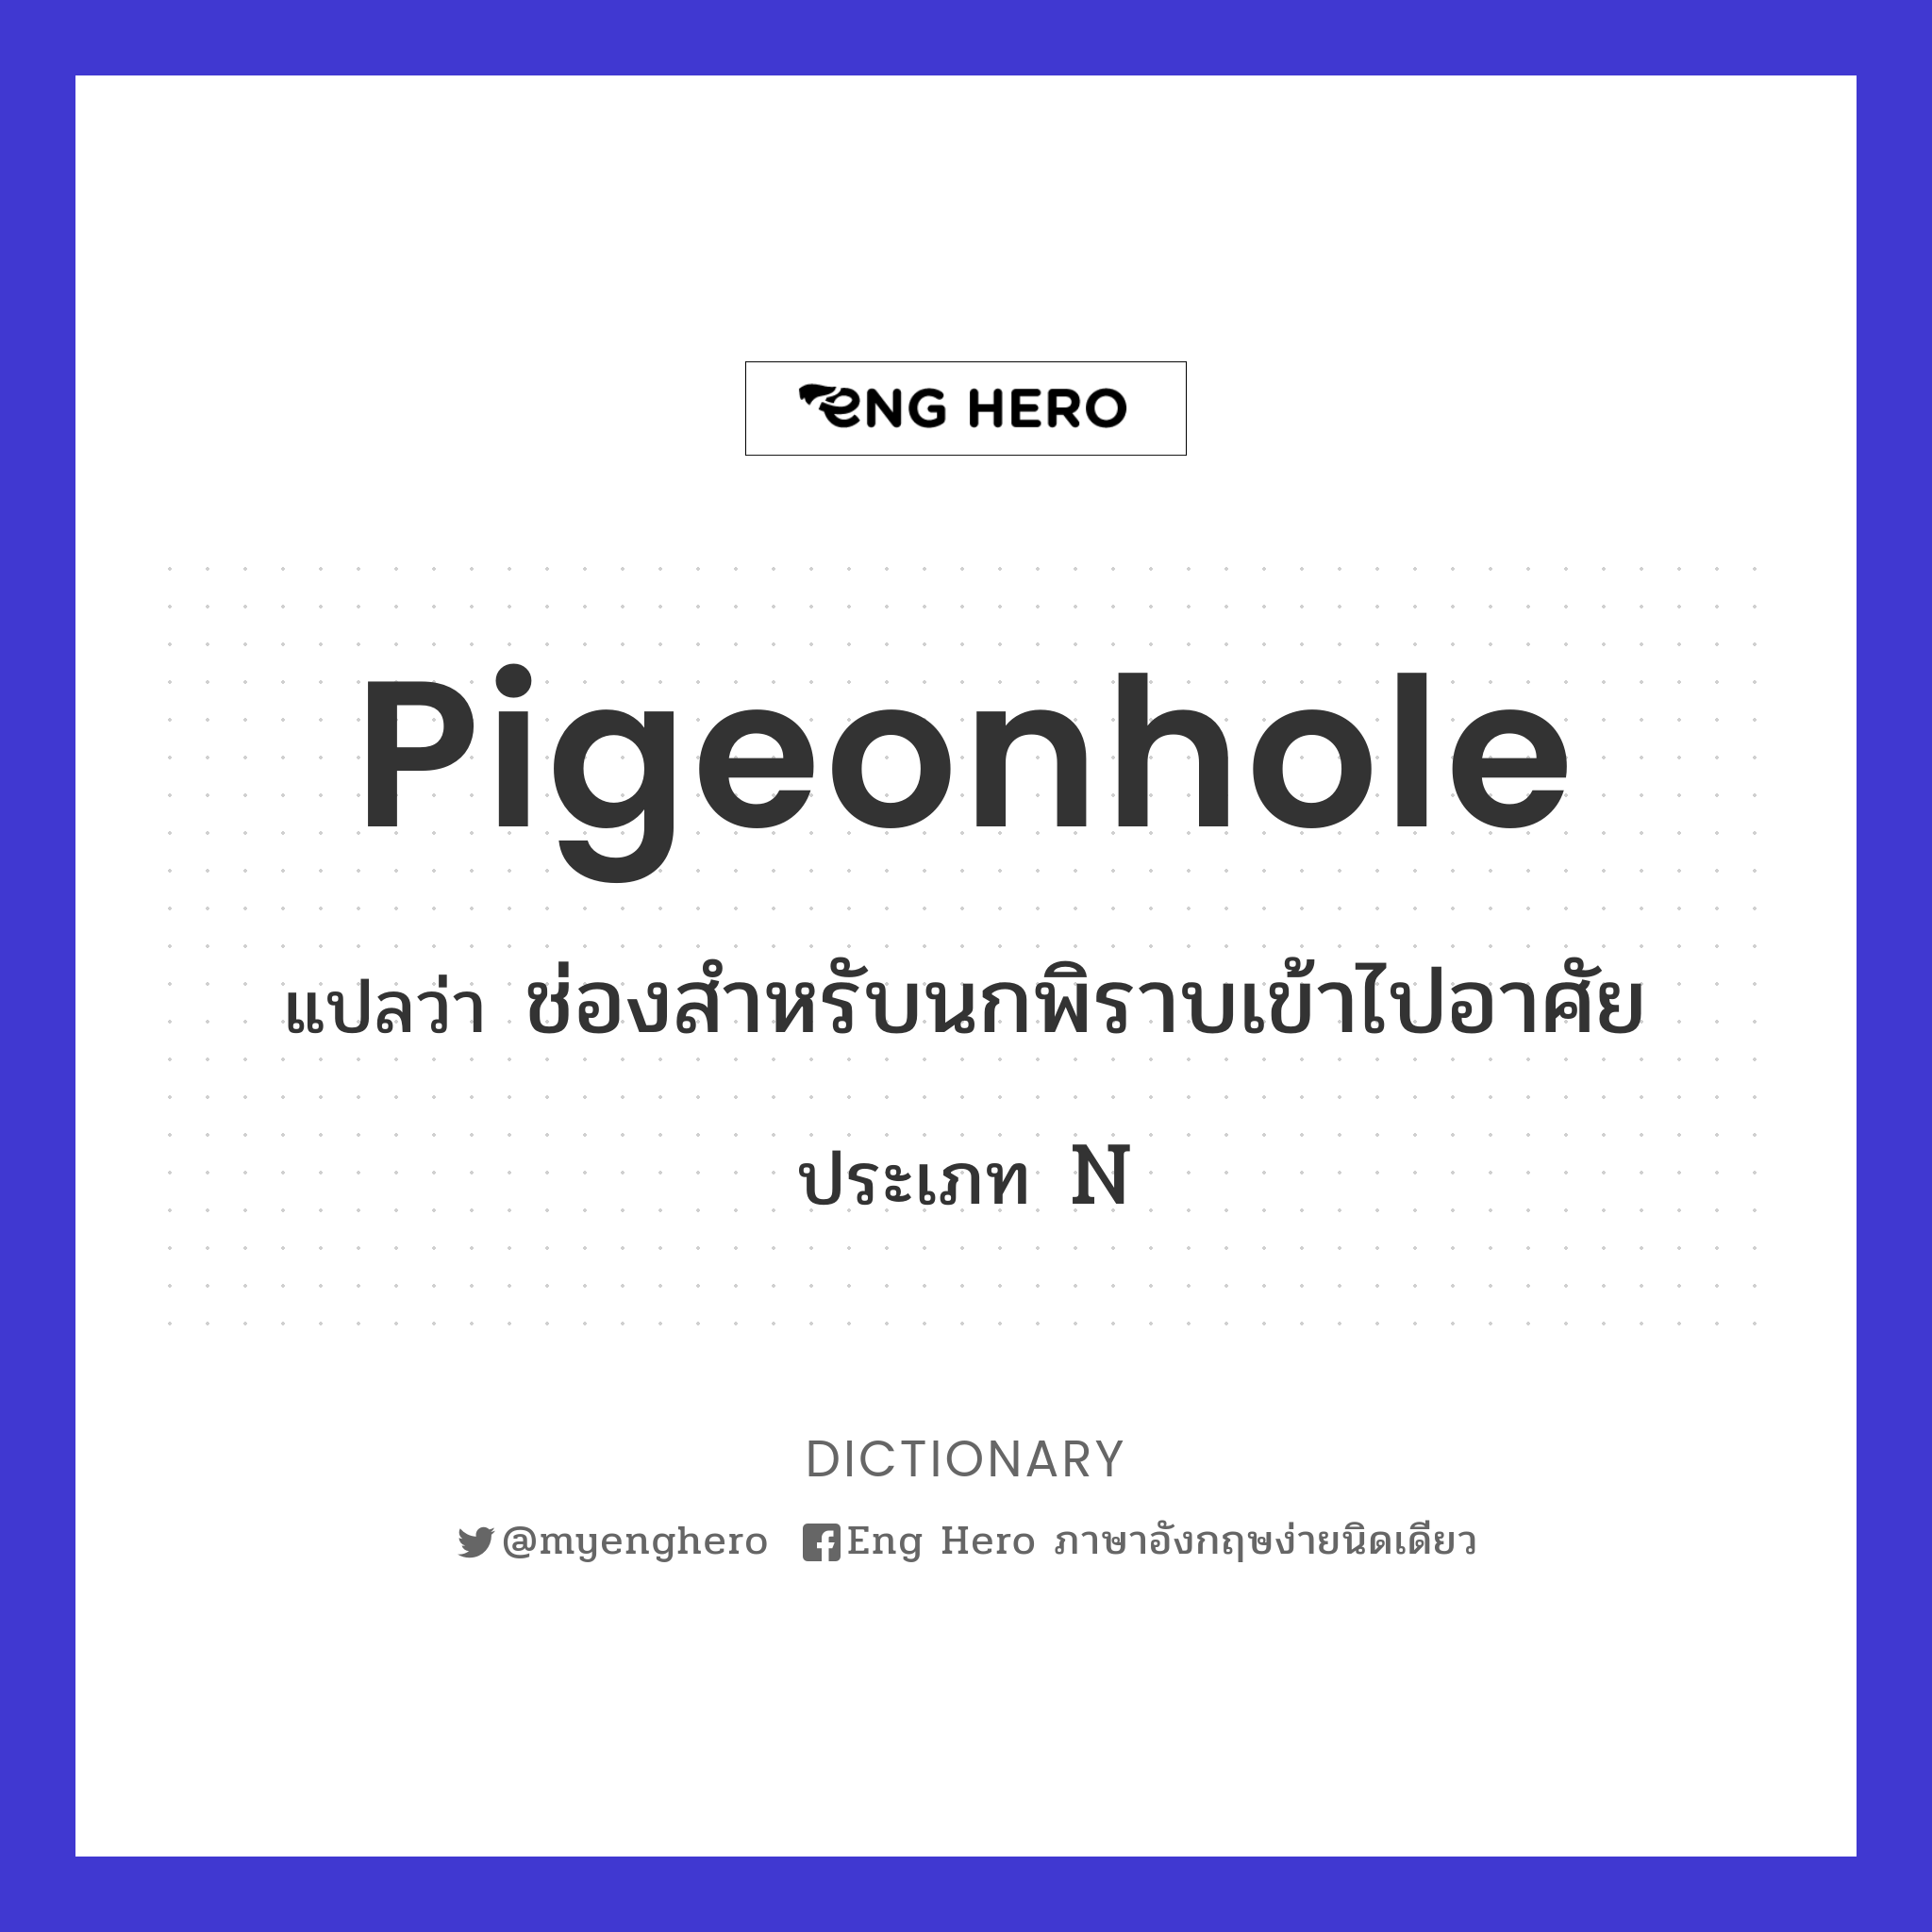 pigeonhole